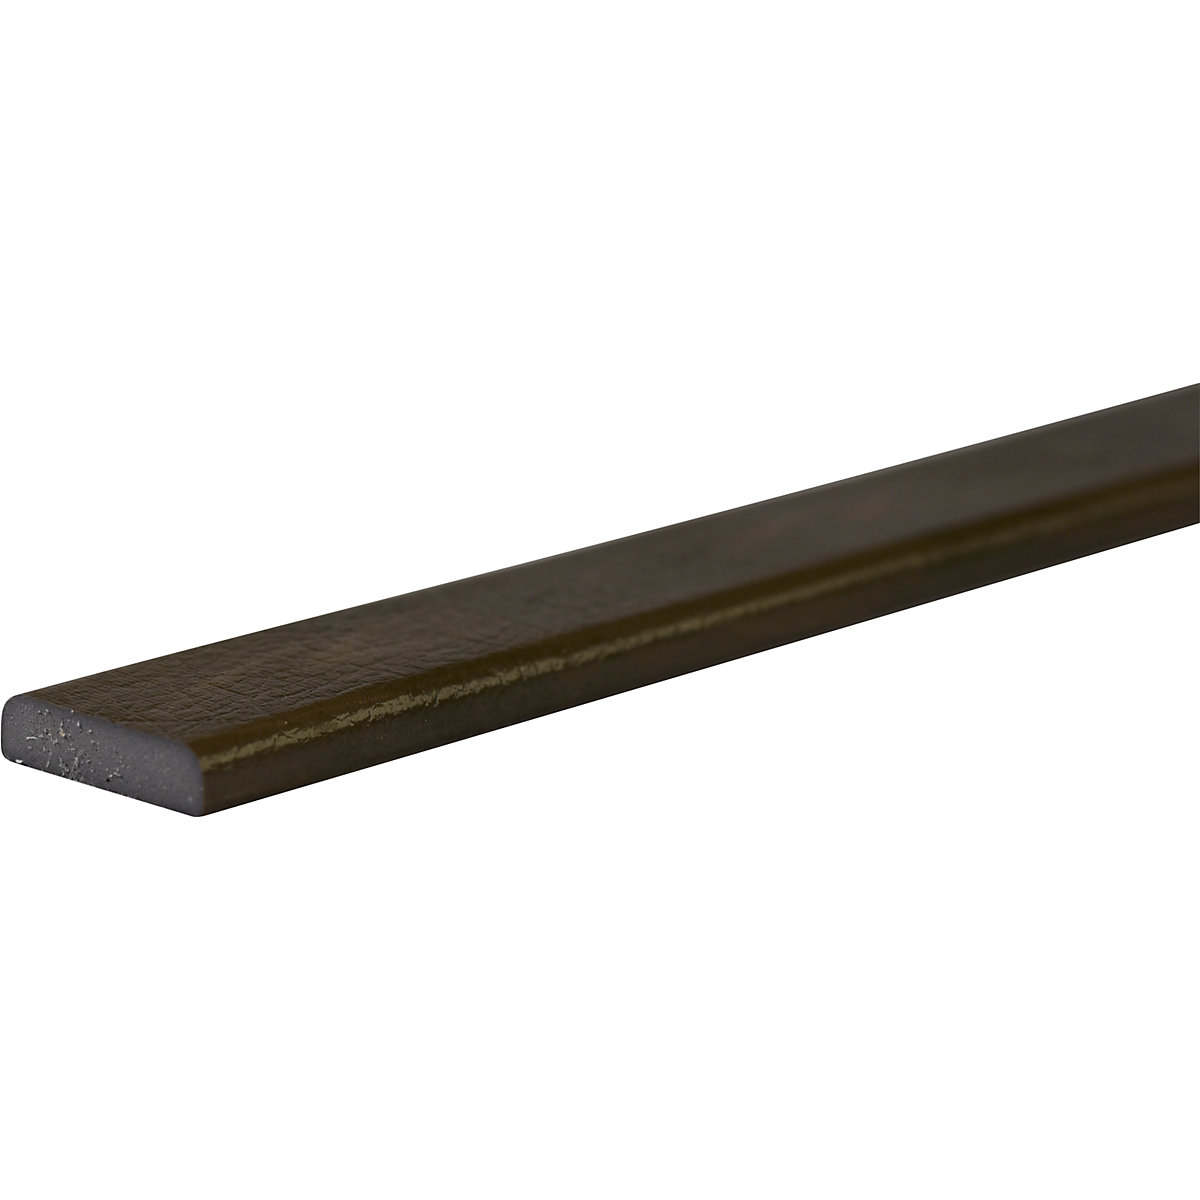 Knuffi®-oppervlaktebescherming – SHG, type F, stuk van 1 m, gecoat hout kaki-29